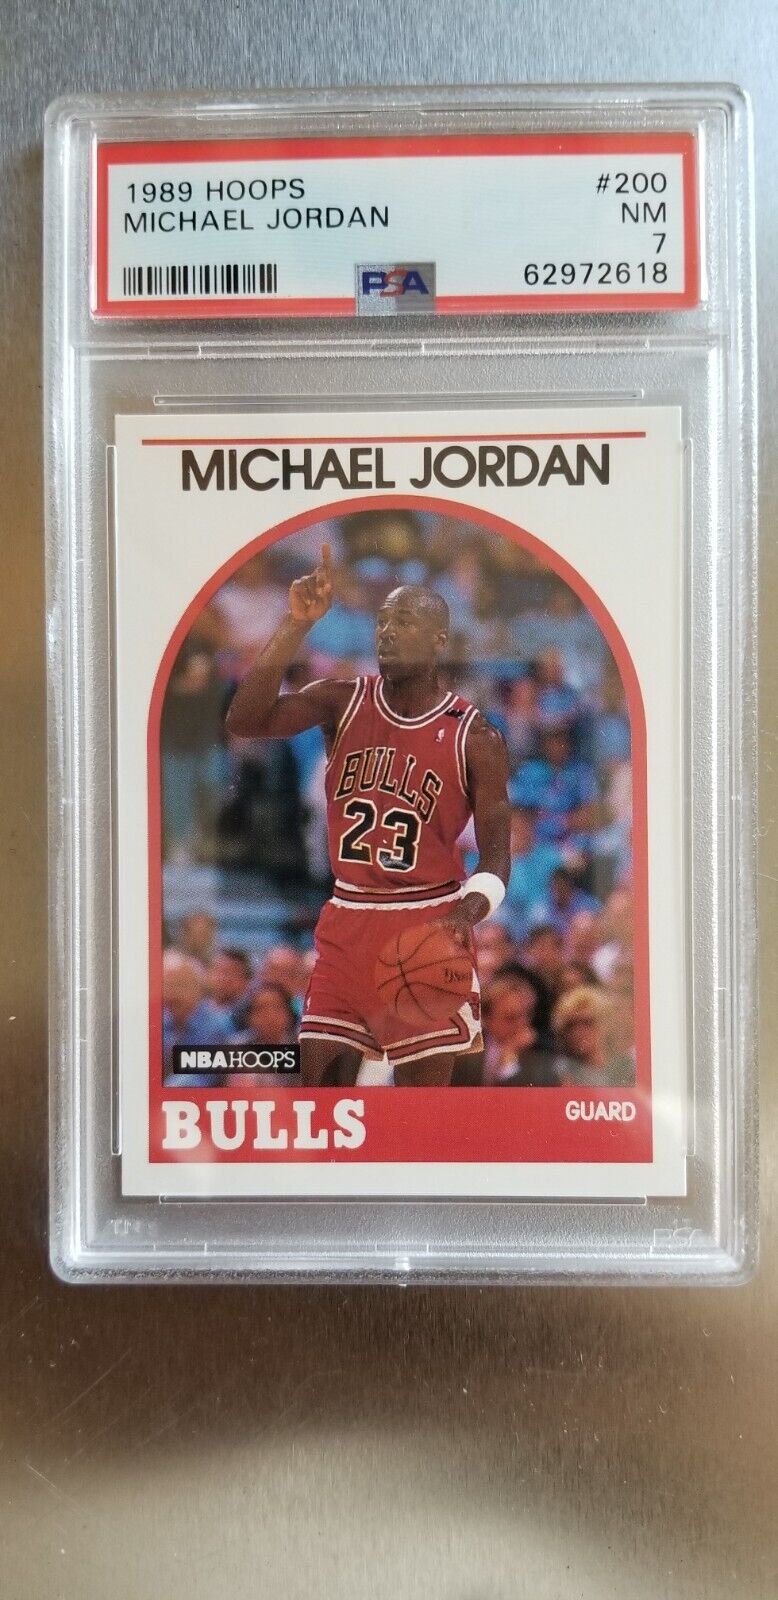 1989 MICHAEL JORDAN NBA HOOPS BASKETBALL CARD #200 PSA 7